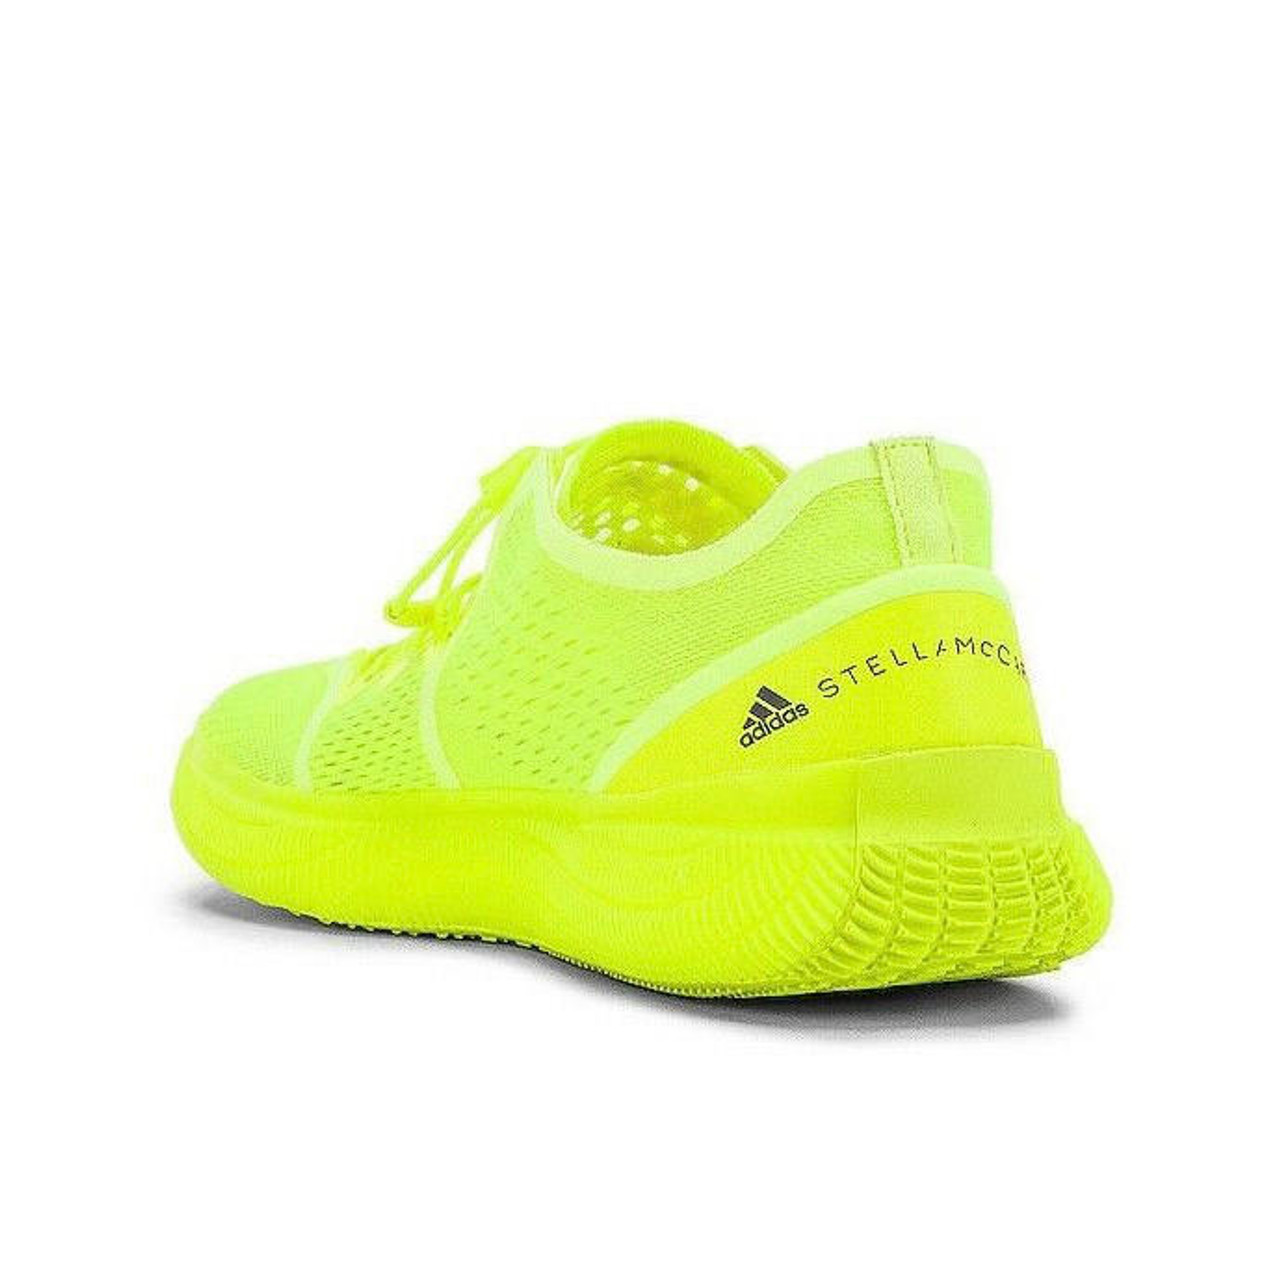 Adidas, 7, Stella McCartney Pureboost Sneakers, Neon Yellow - Thread